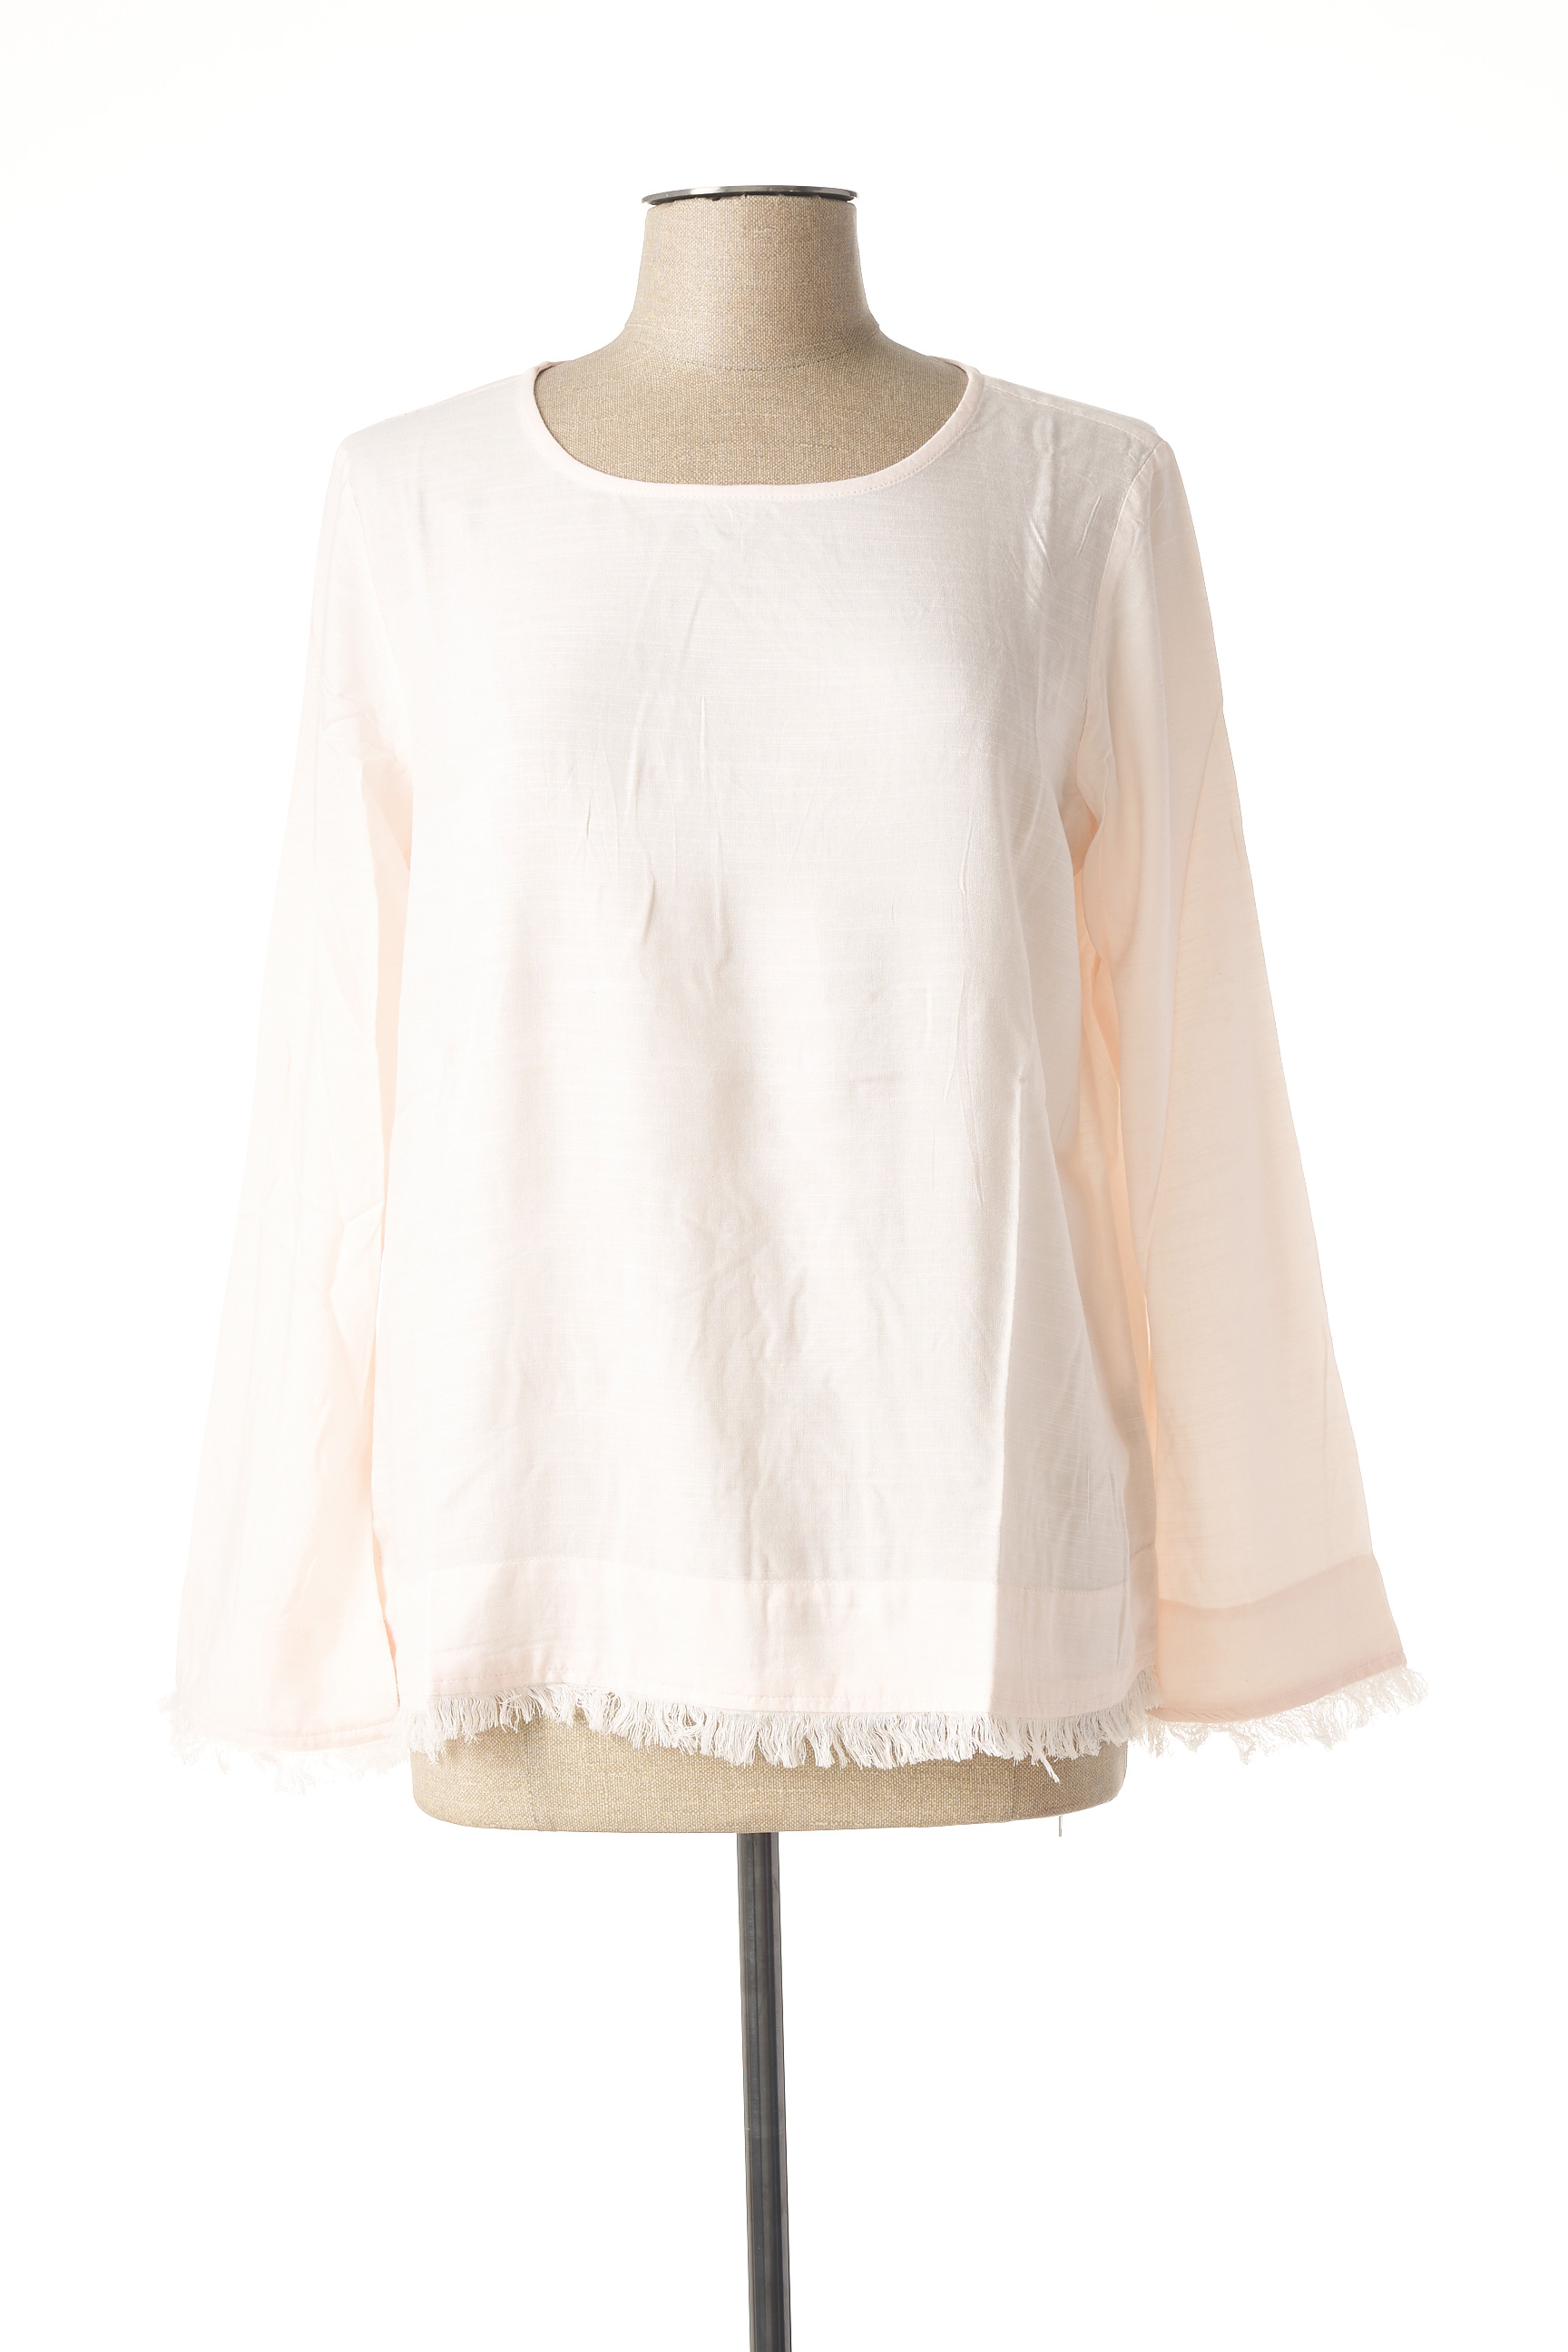 Heine Shirt Top Débardeur rose blanc rayures taille 36 à 52 rayé NEUF 352 